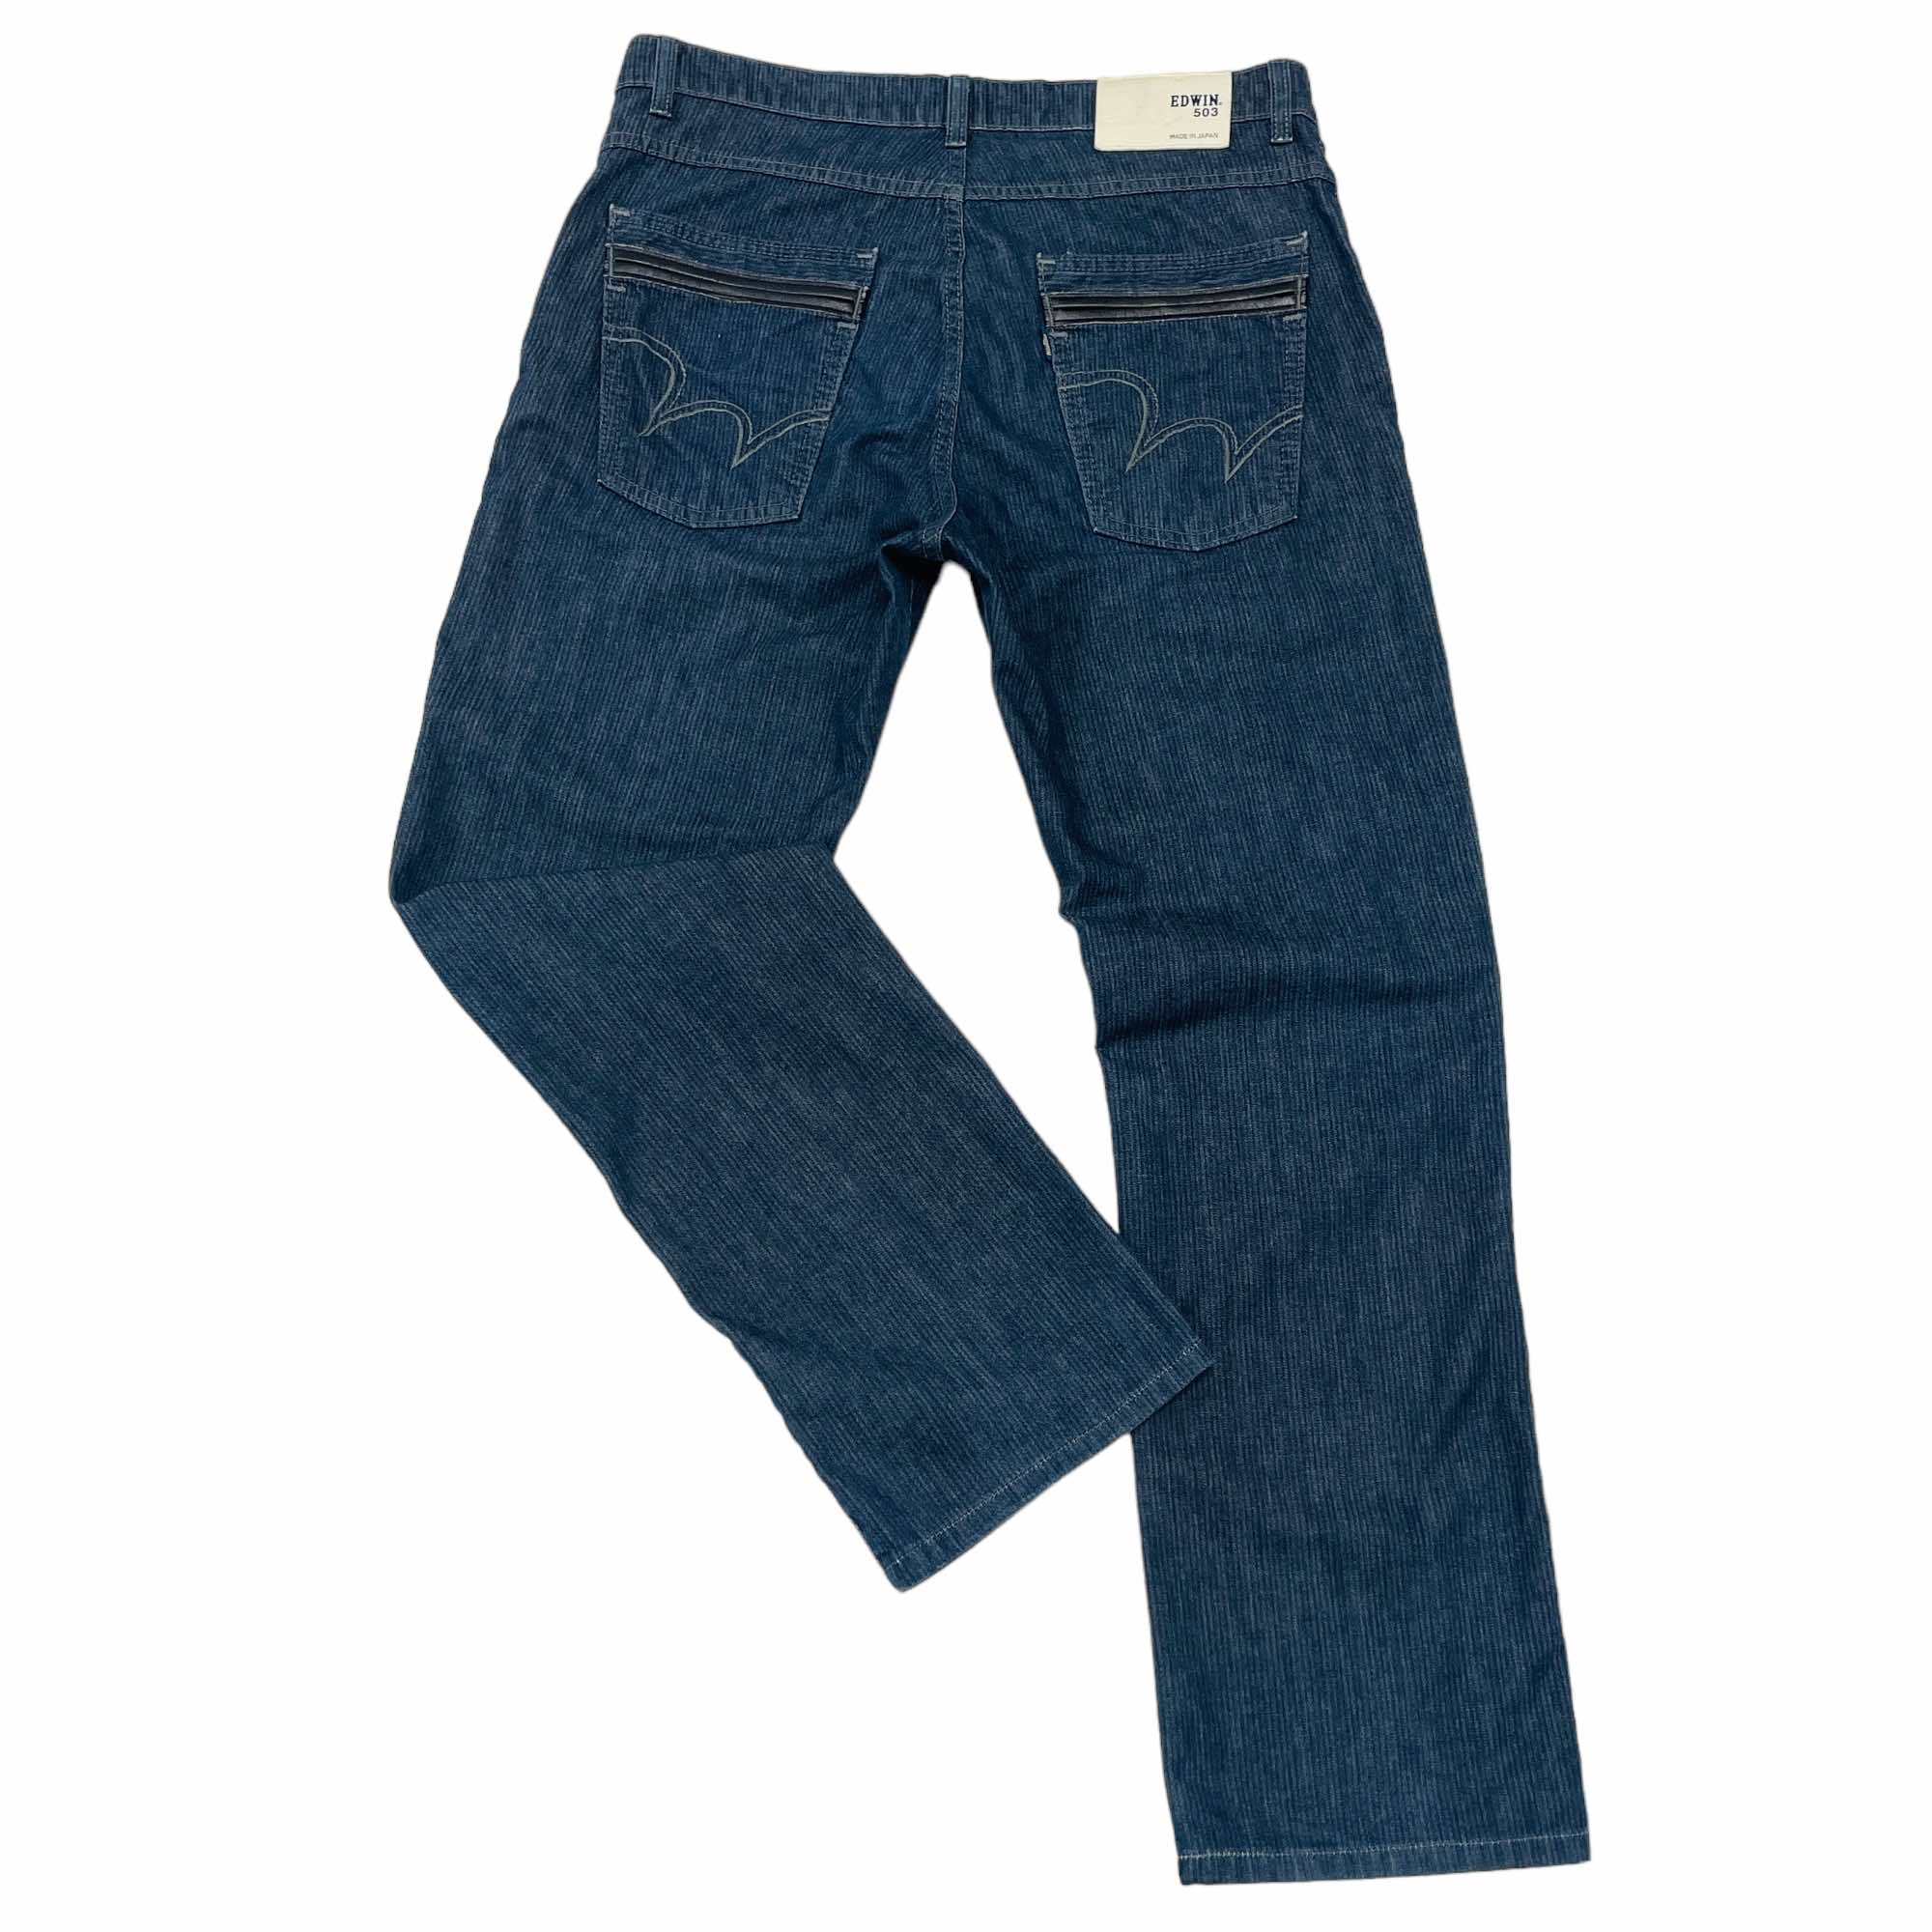 Edwin 503 Denim Jeans - W34 L28